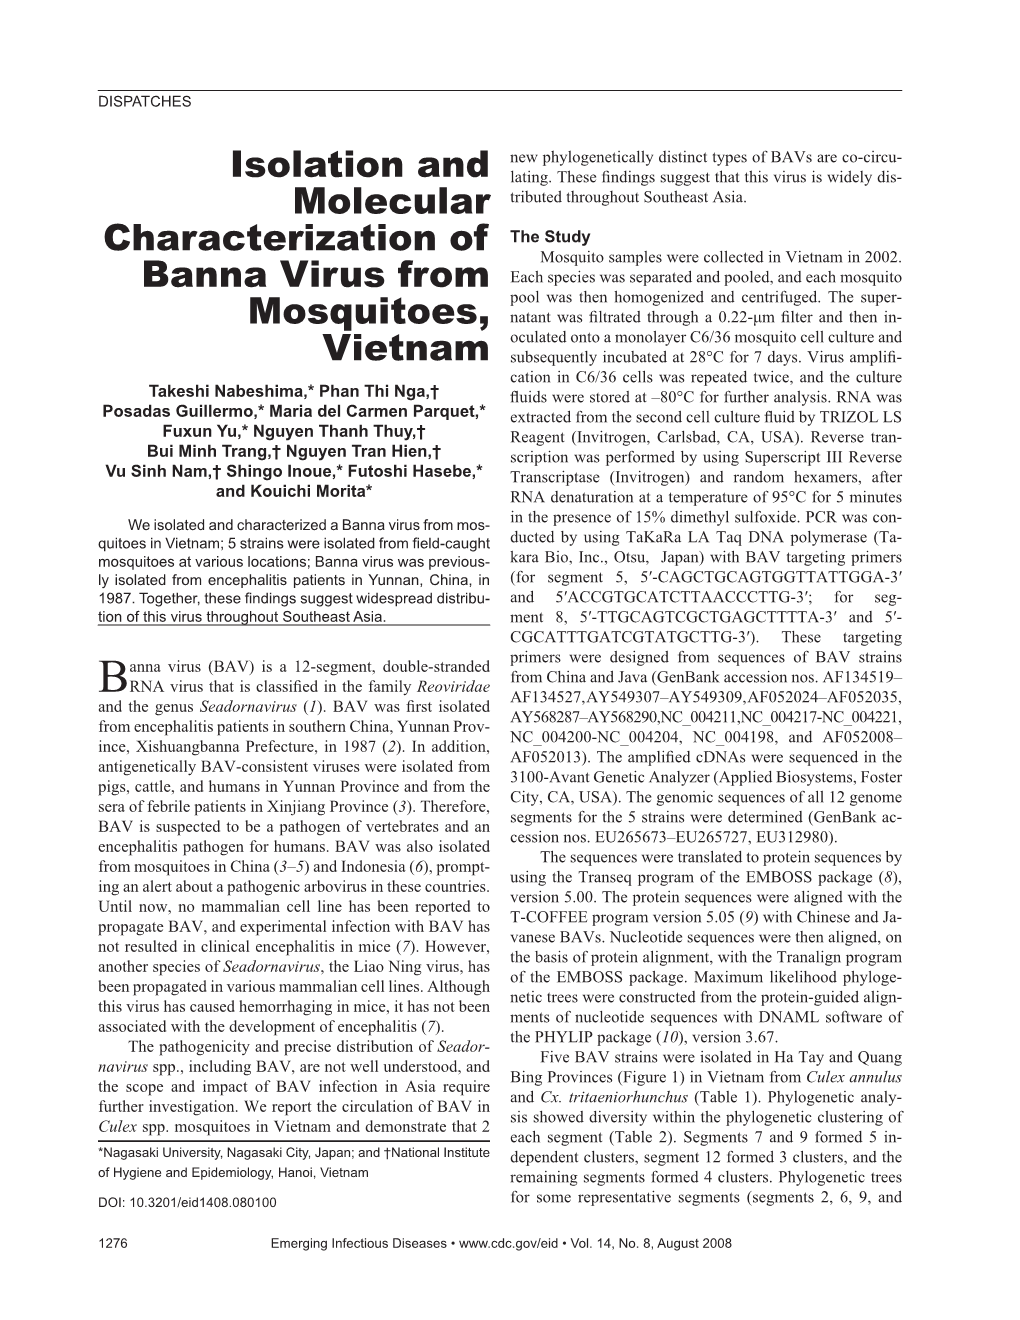 Isolation and Molecular Characterization of Banna Virus